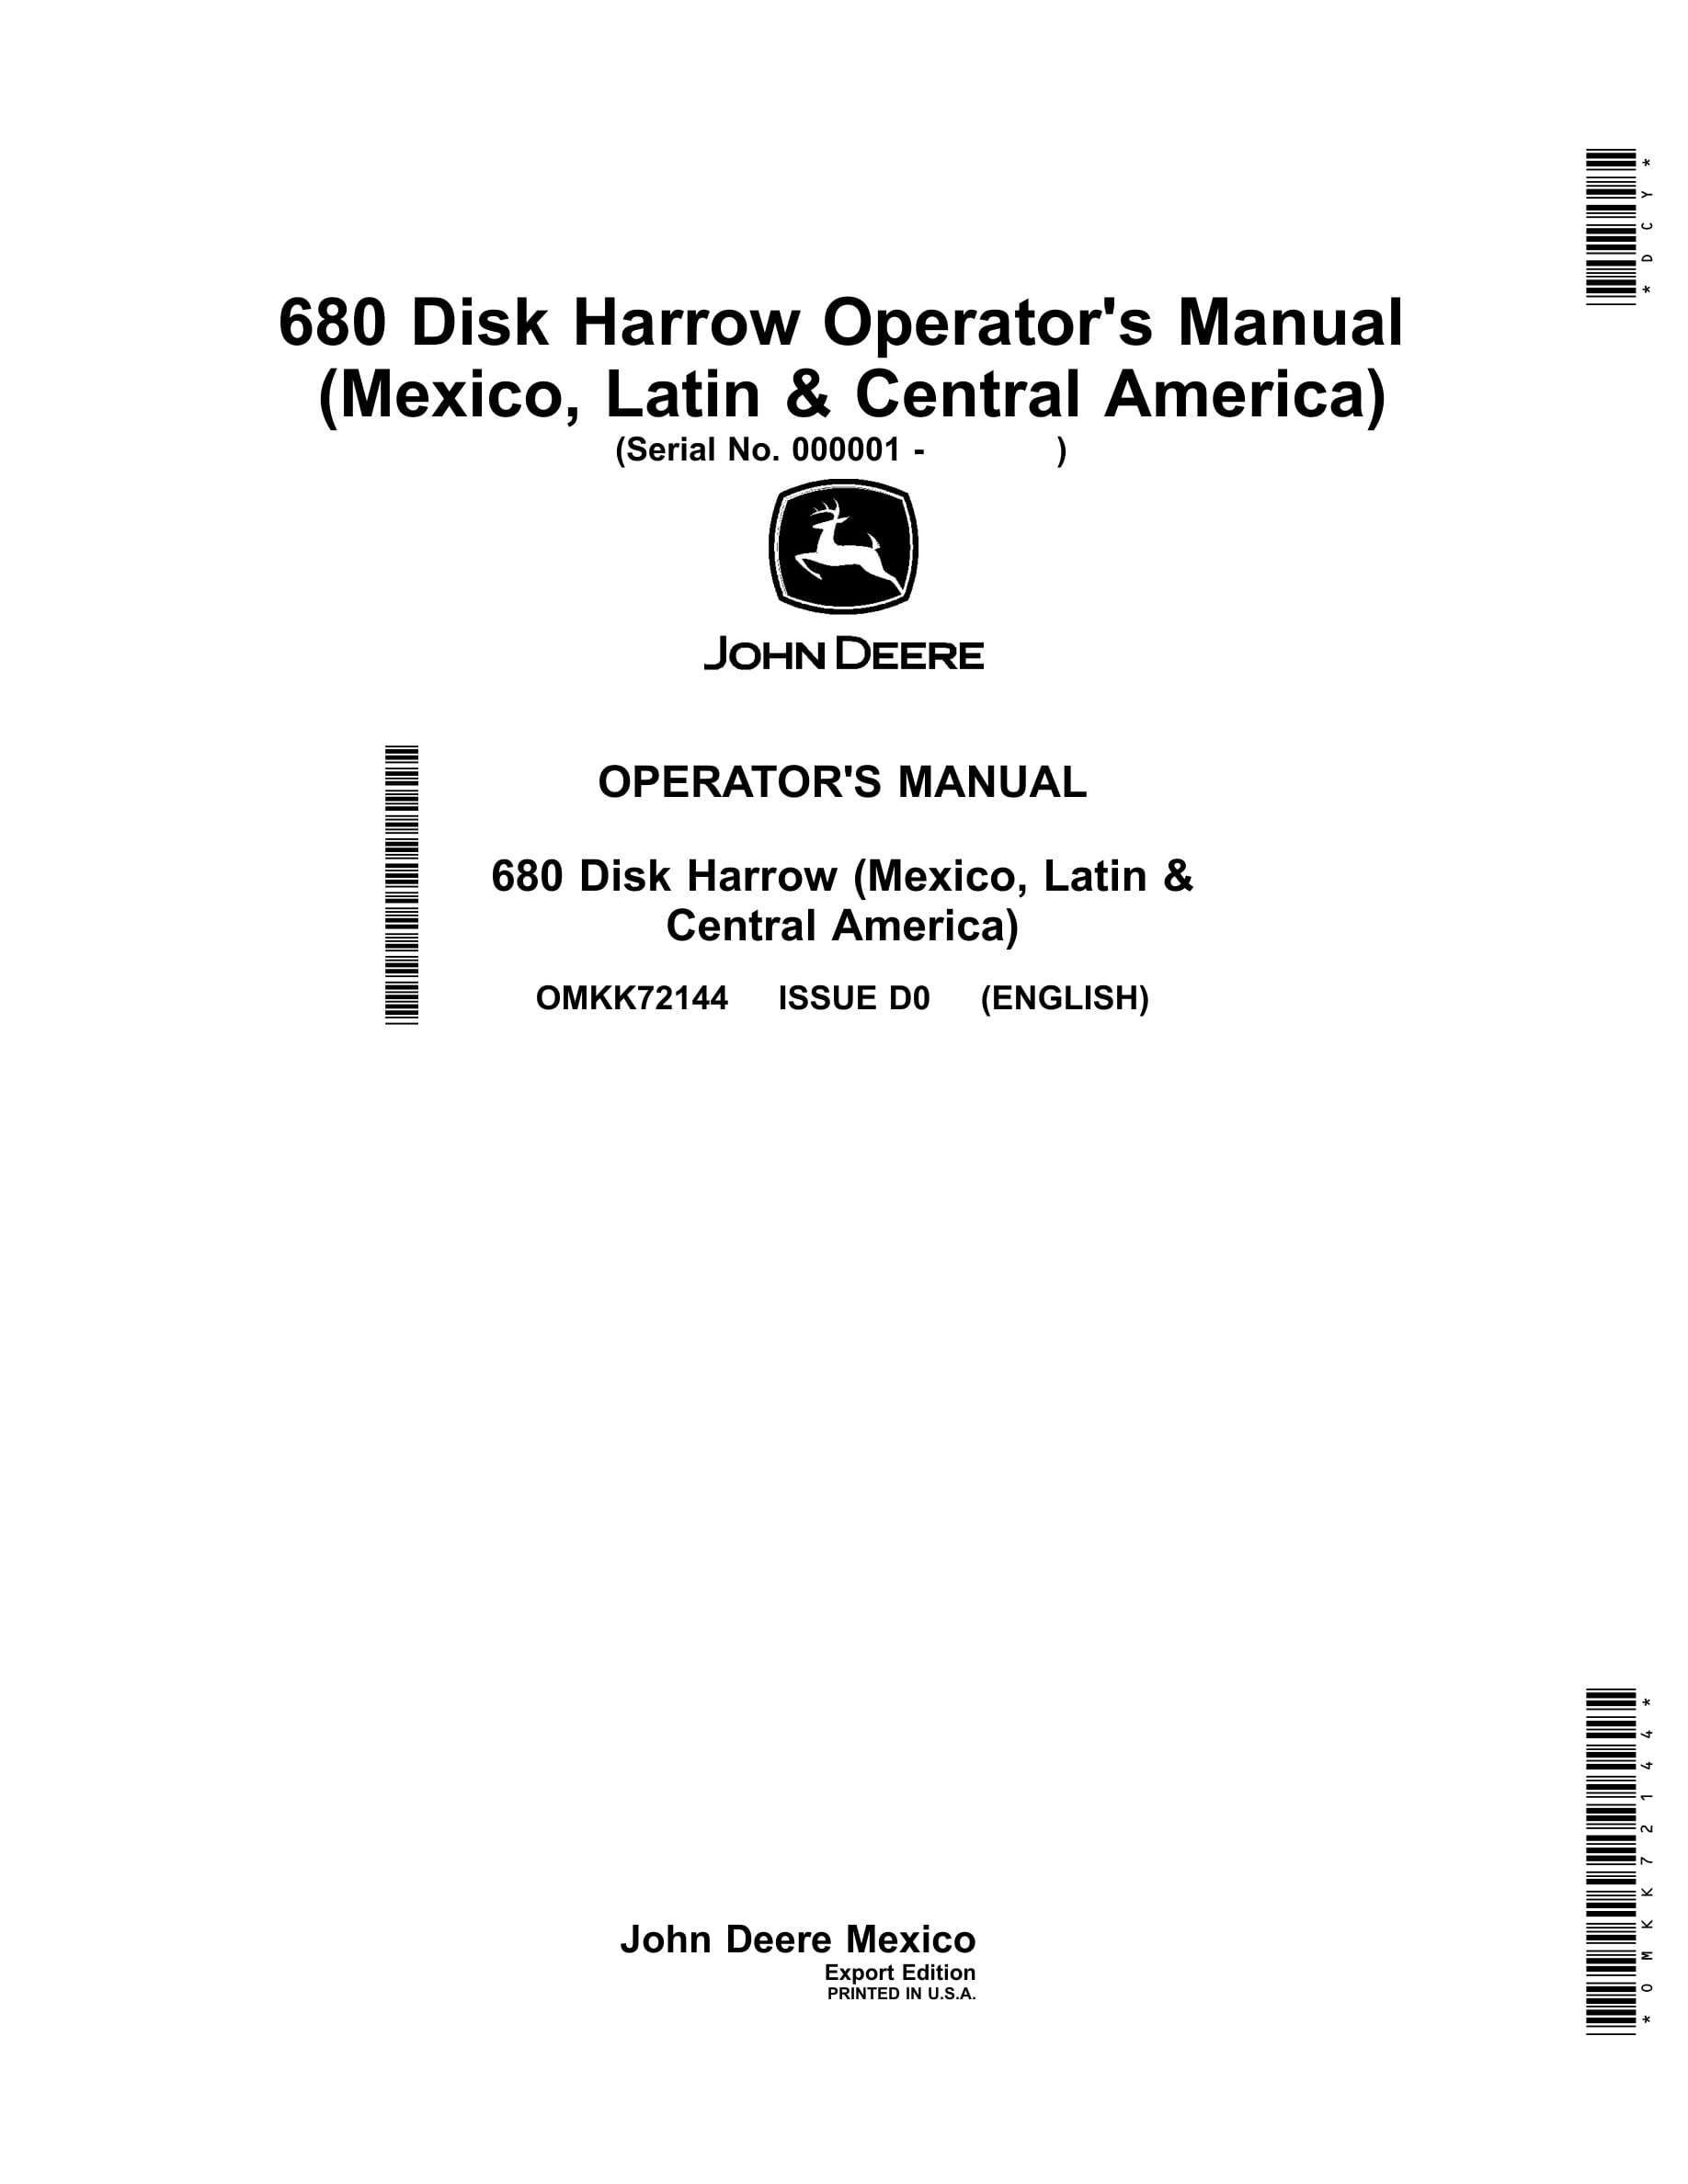 John Deere 680 Disk Harrow Operator Manual OMKK72144-1